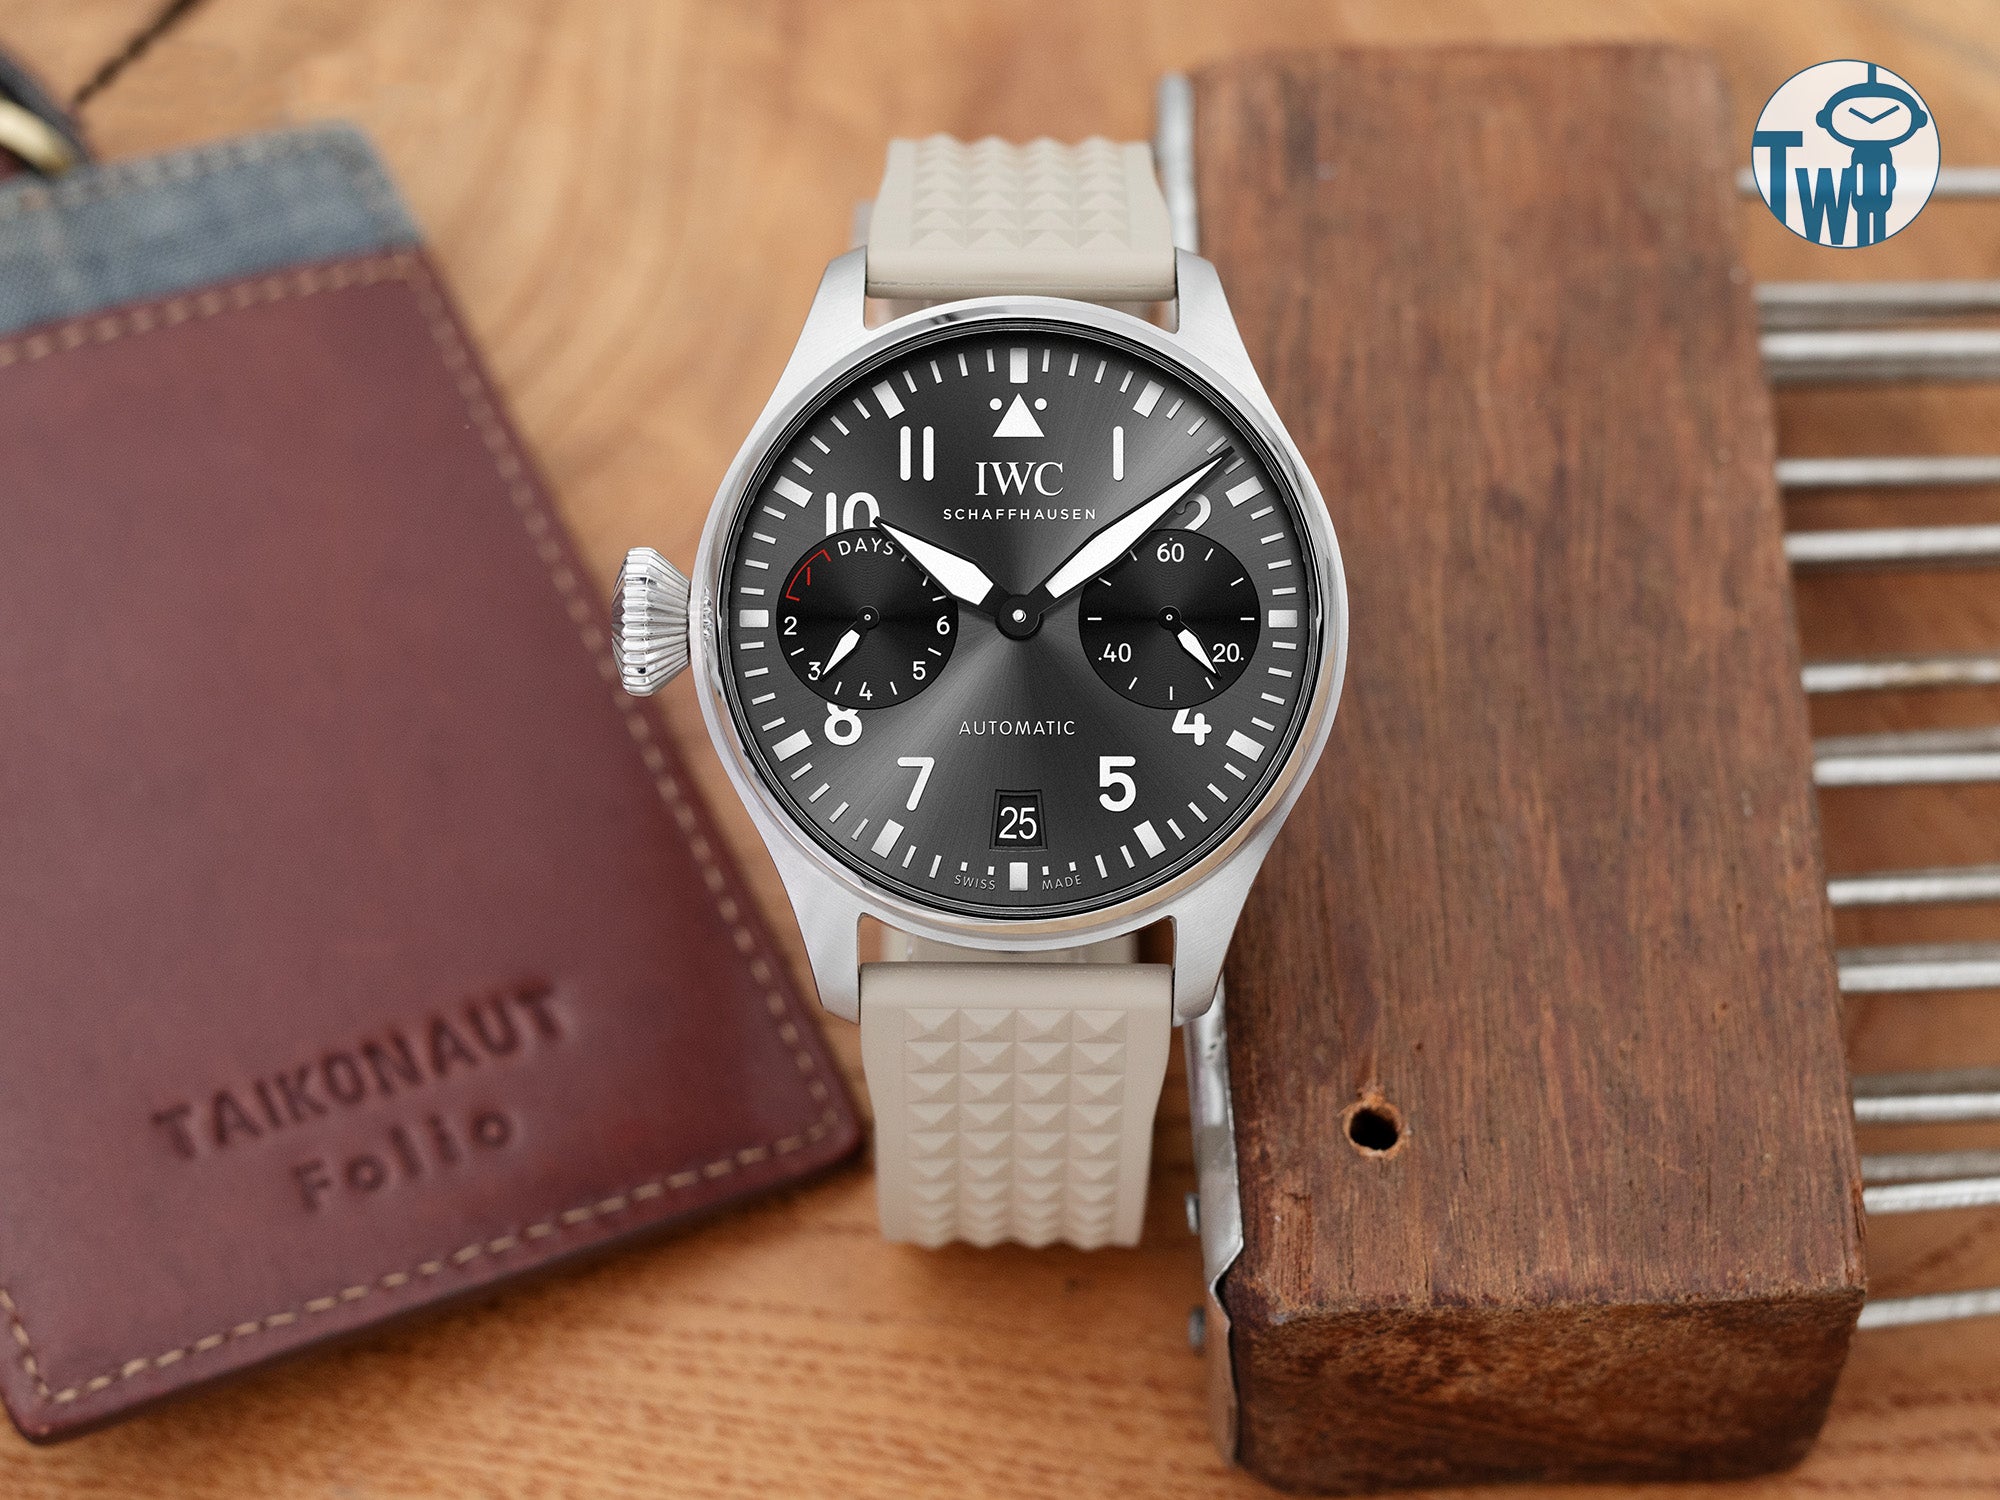 IWC萬國錶 大飛行員系列 7日鍊 腕錶 左撇子手錶搭配 太空人腕時計TW 的橡膠錶帶。